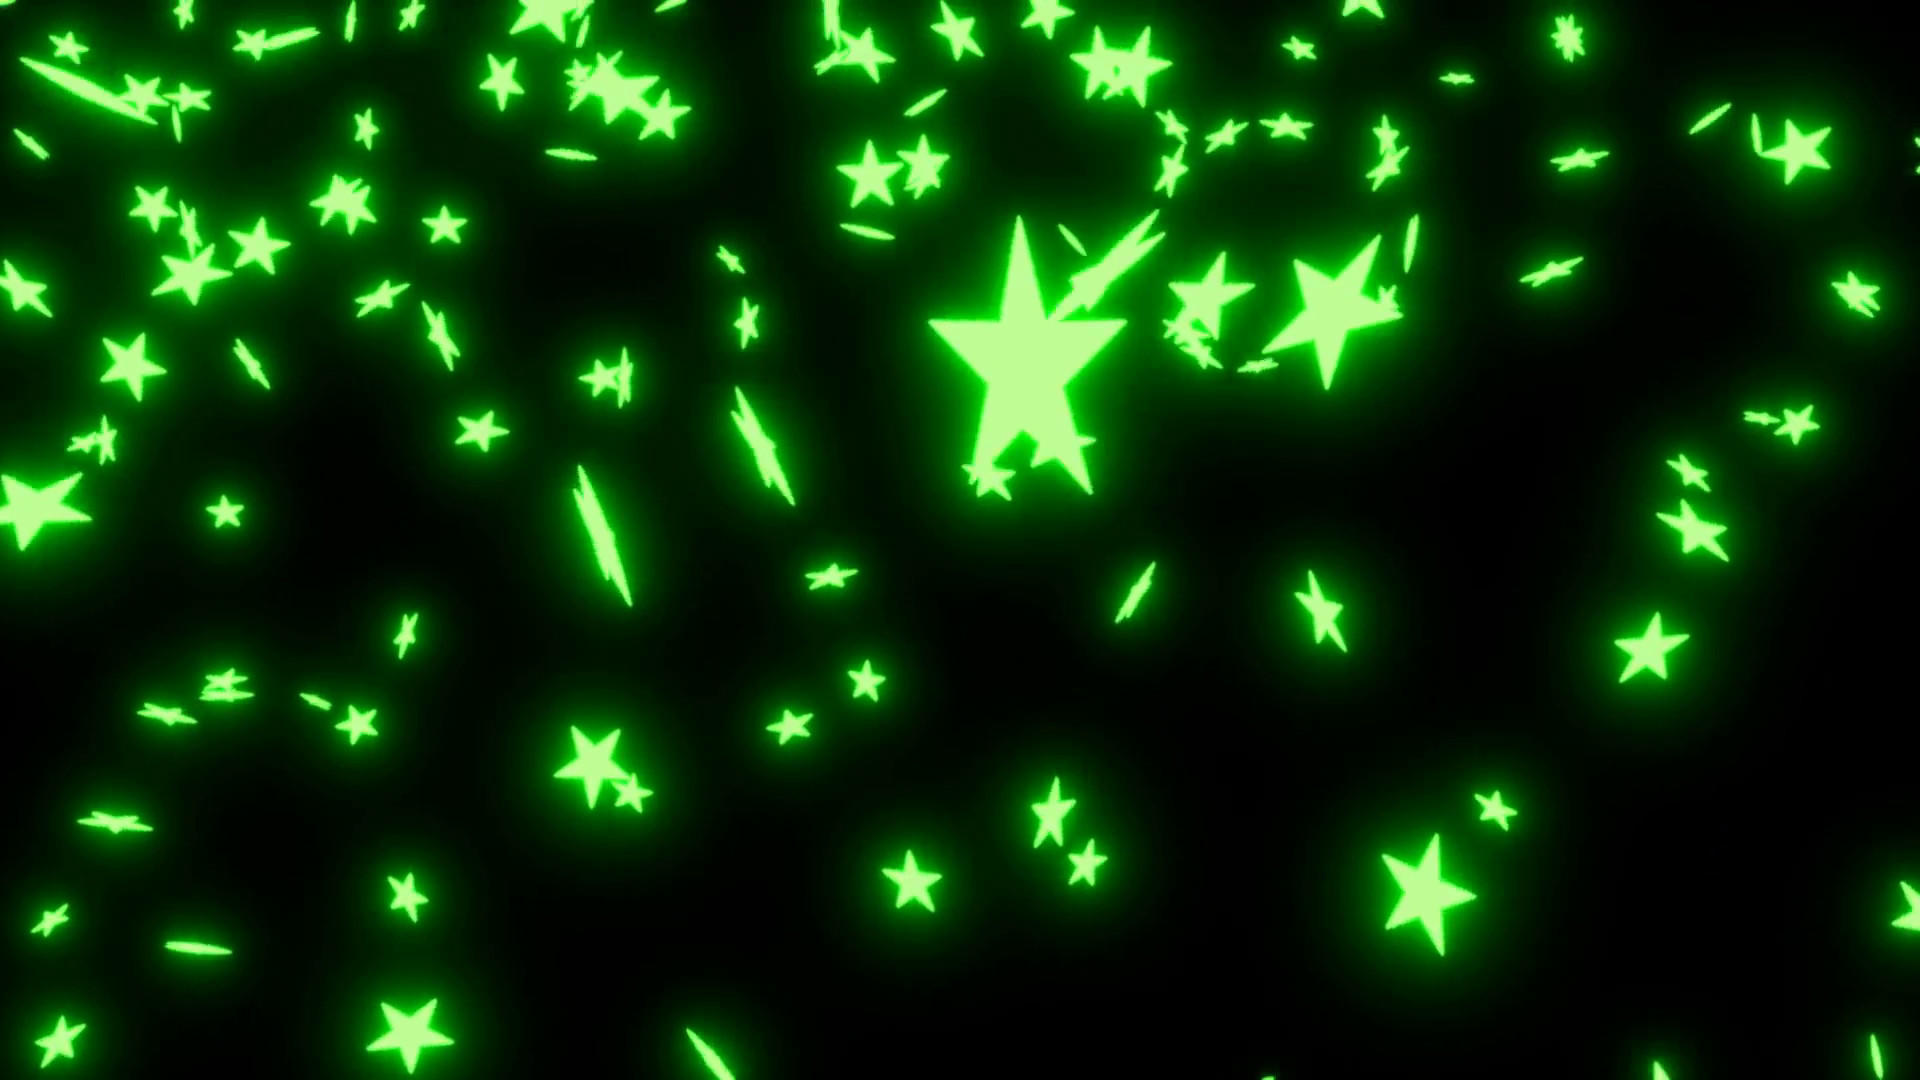 1920x1080 Animated falling neon green stars on black background 2. Motion Background  - VideoBlocks